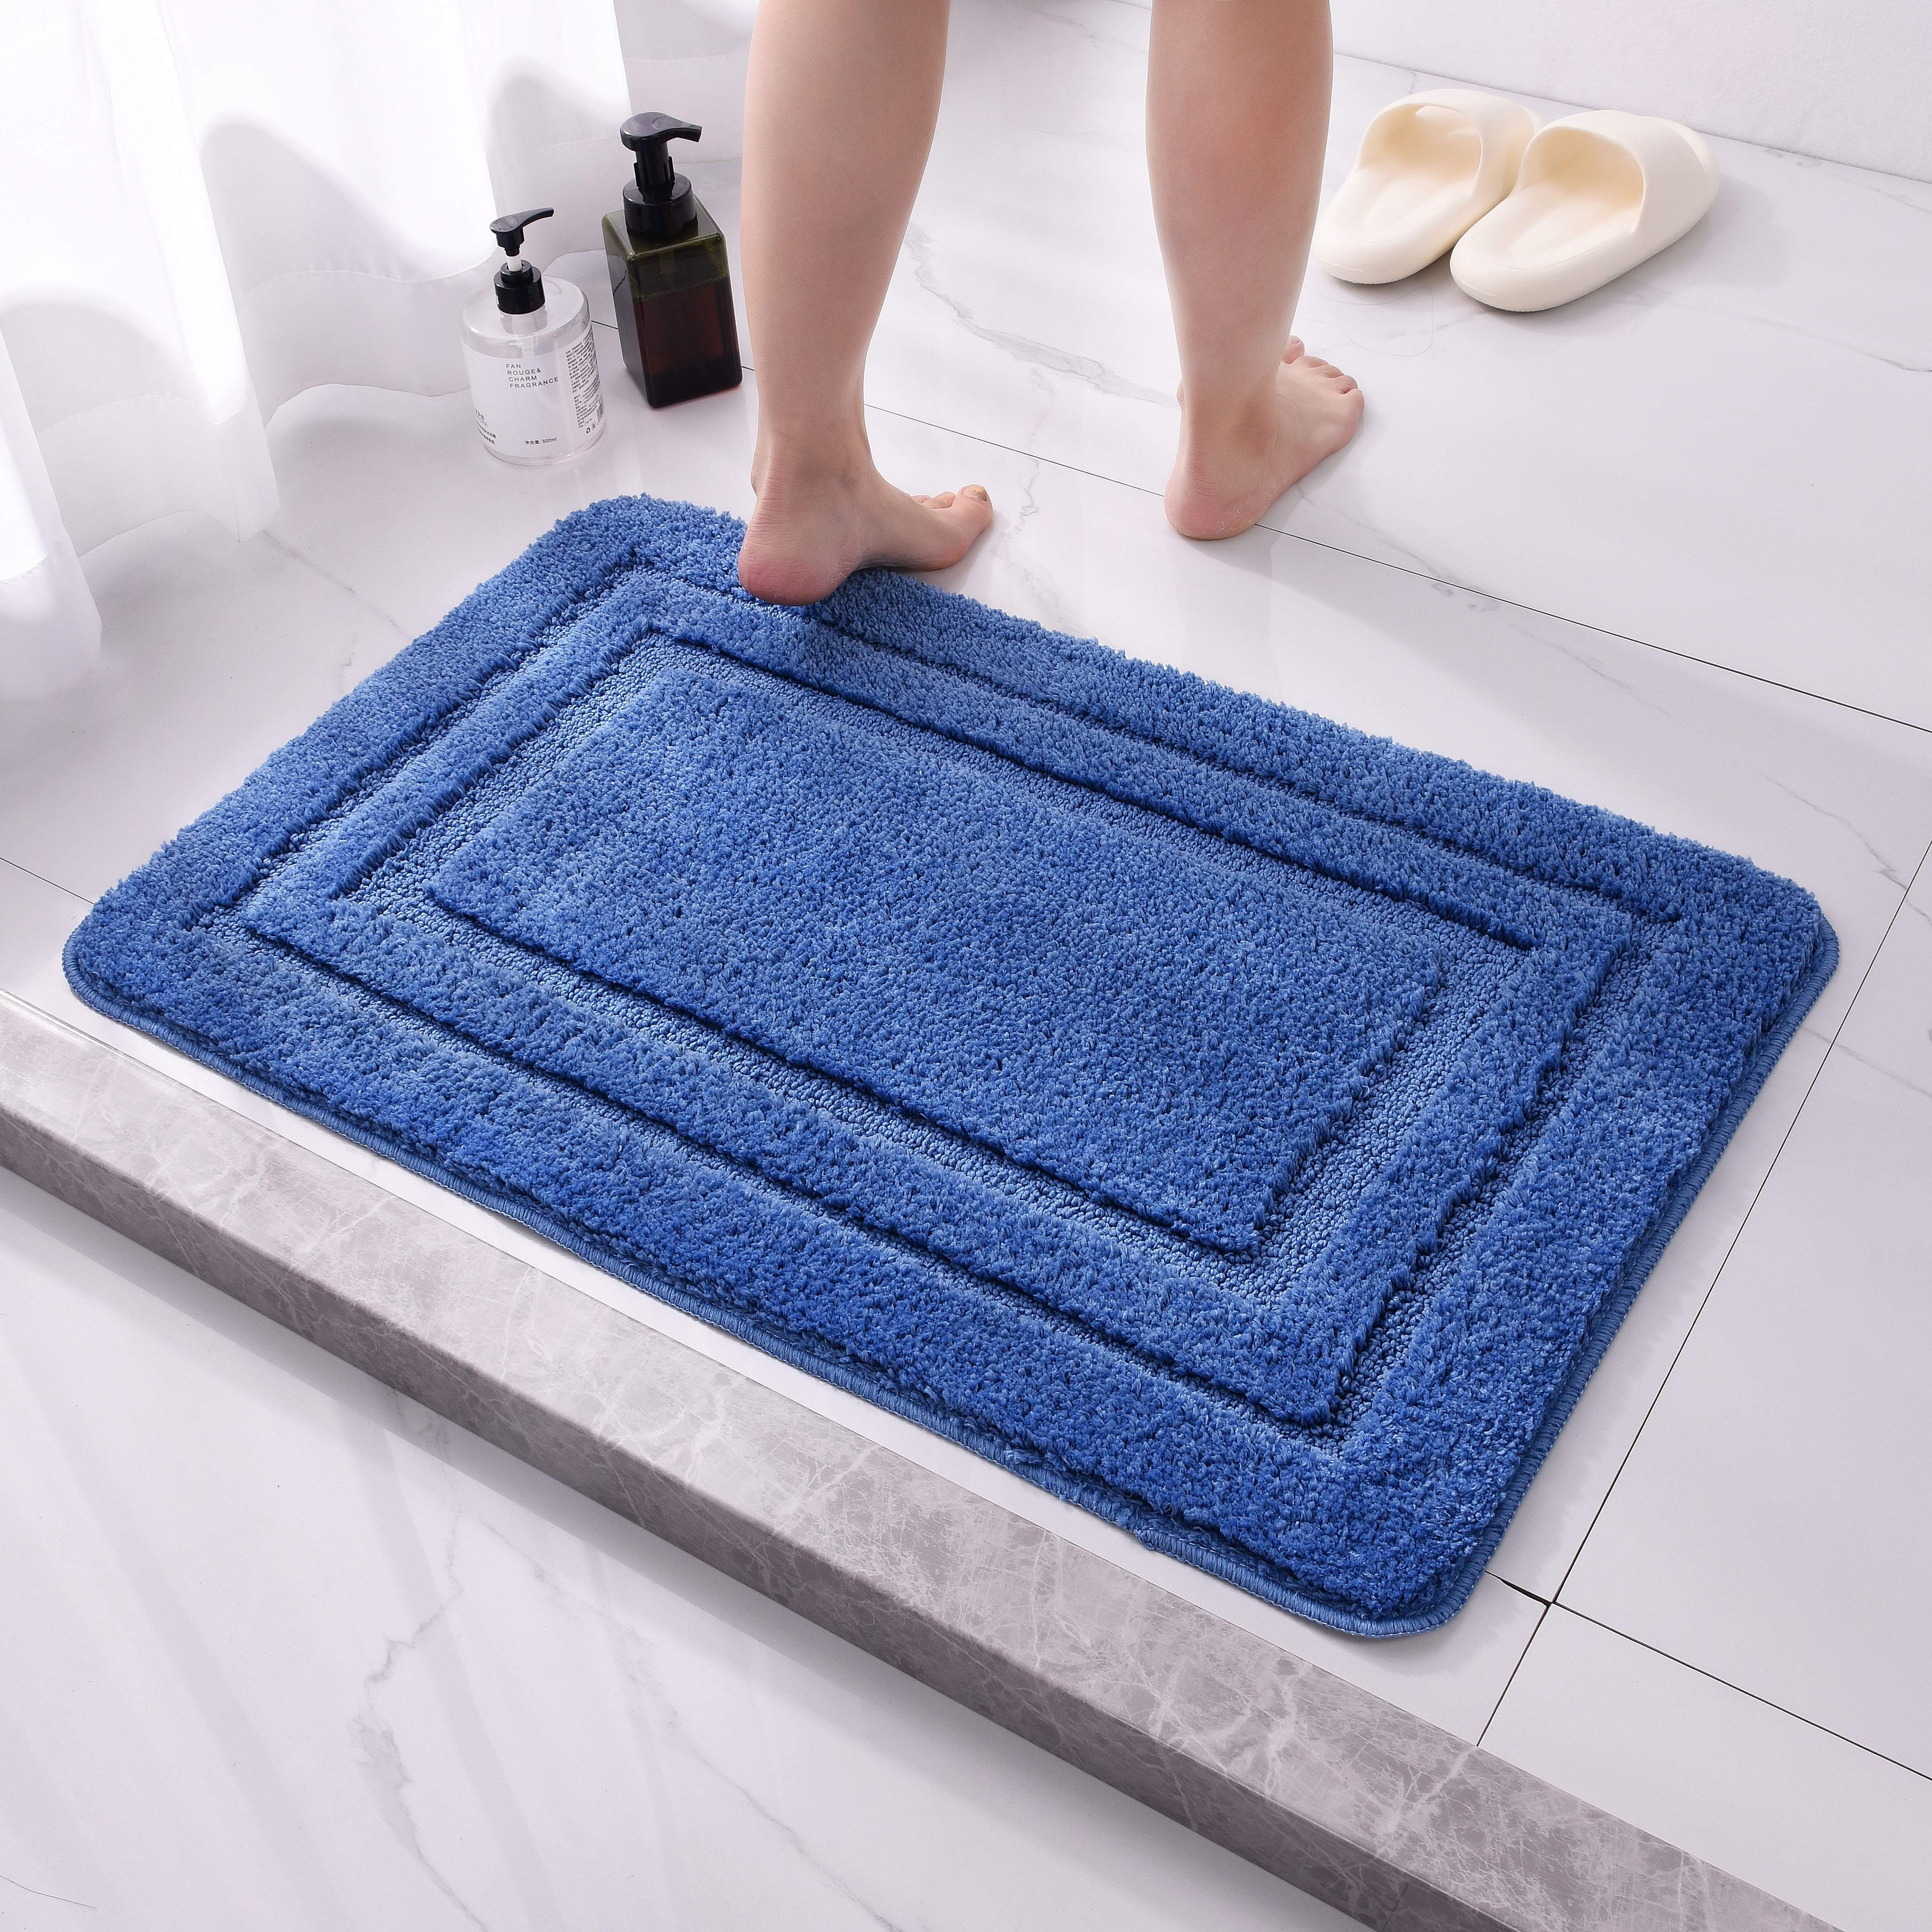 Bathroom Rugs Mats Water Absorbent Non-slip Mat Used In Bathroom